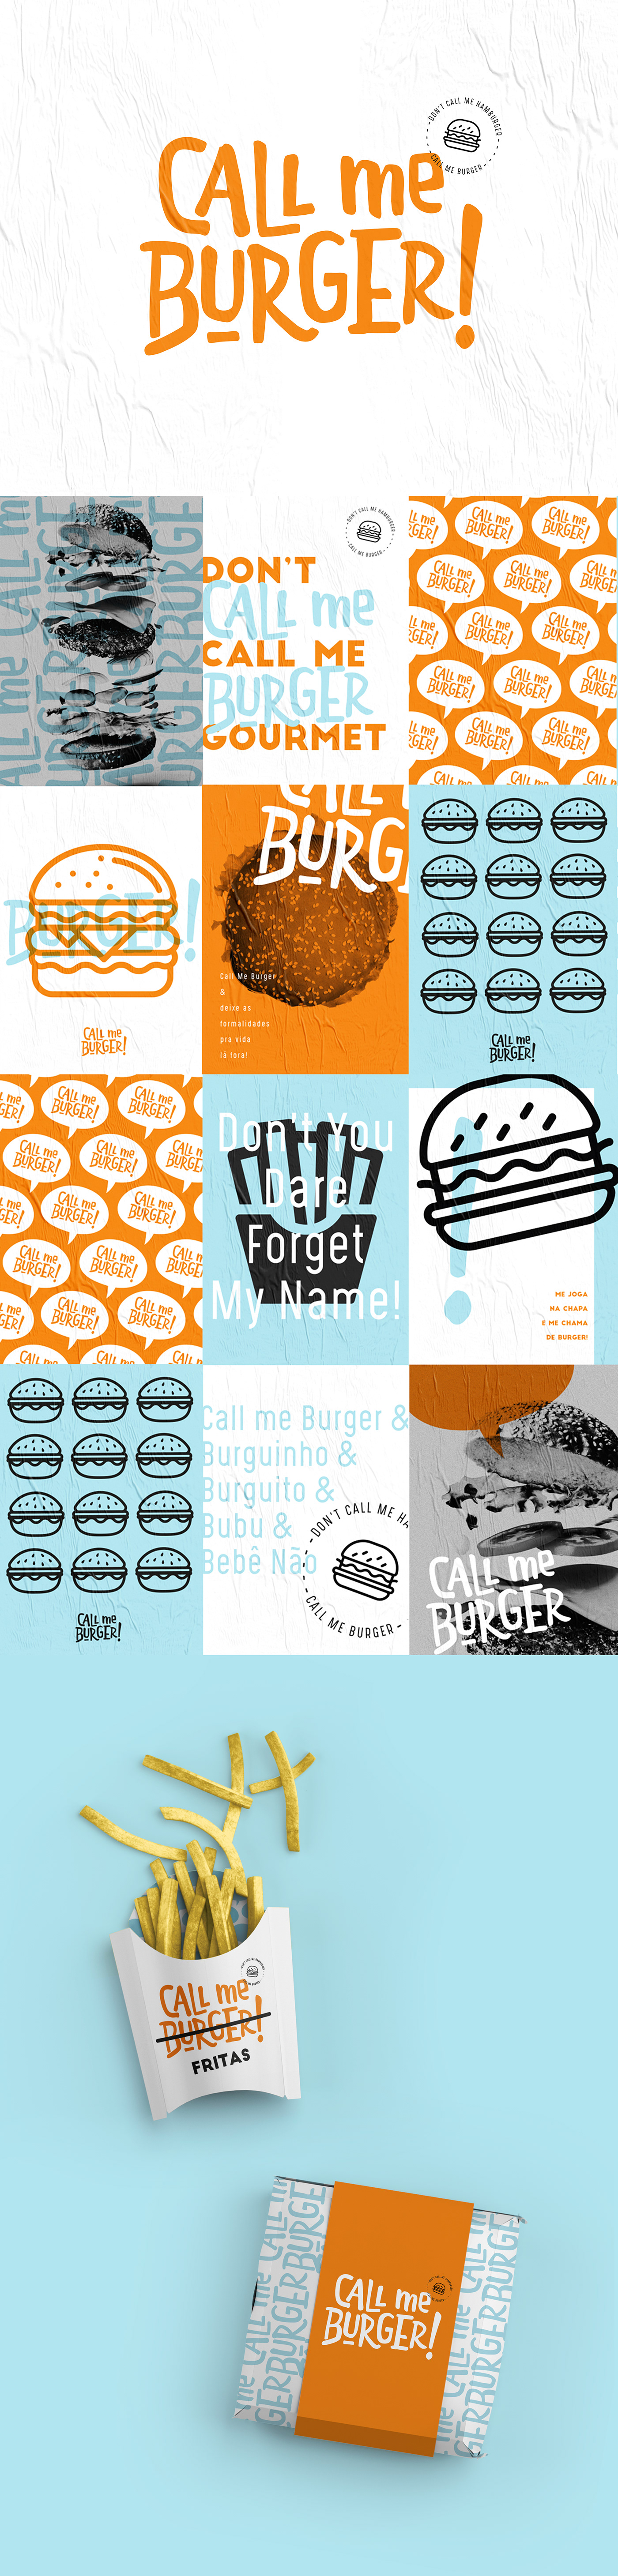 brand burger callme colorful diner Fun logo posters restaurant stamp